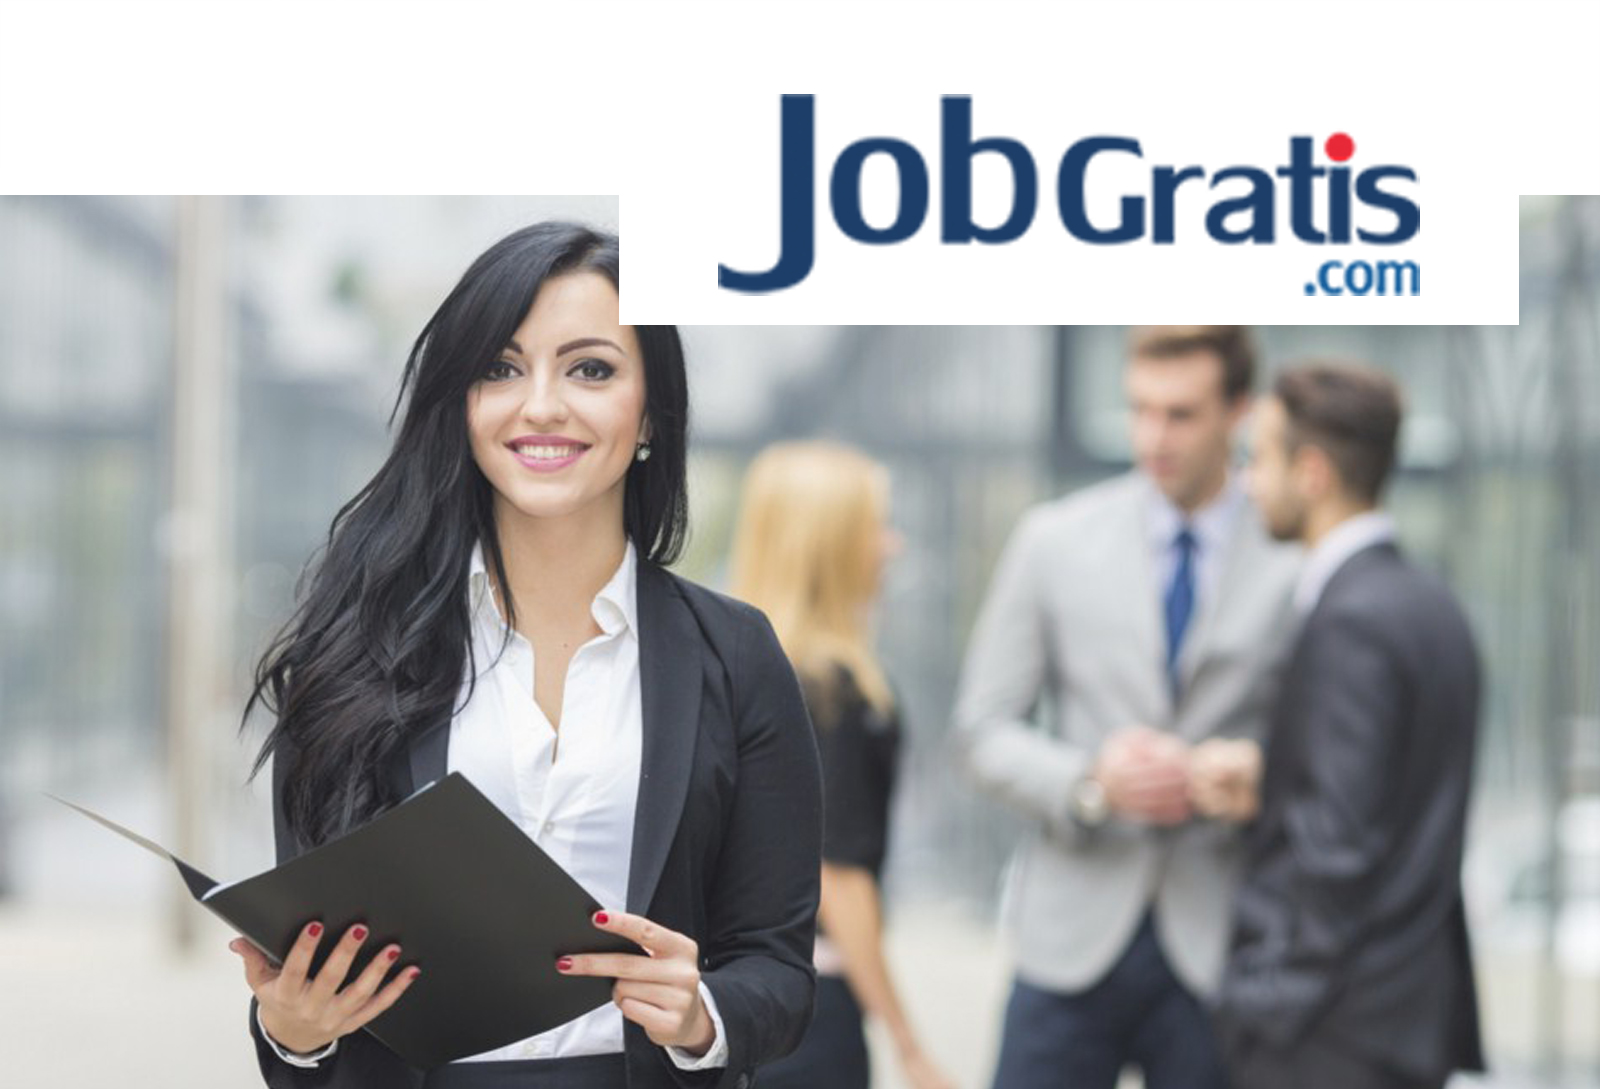 www.jobgratis.com